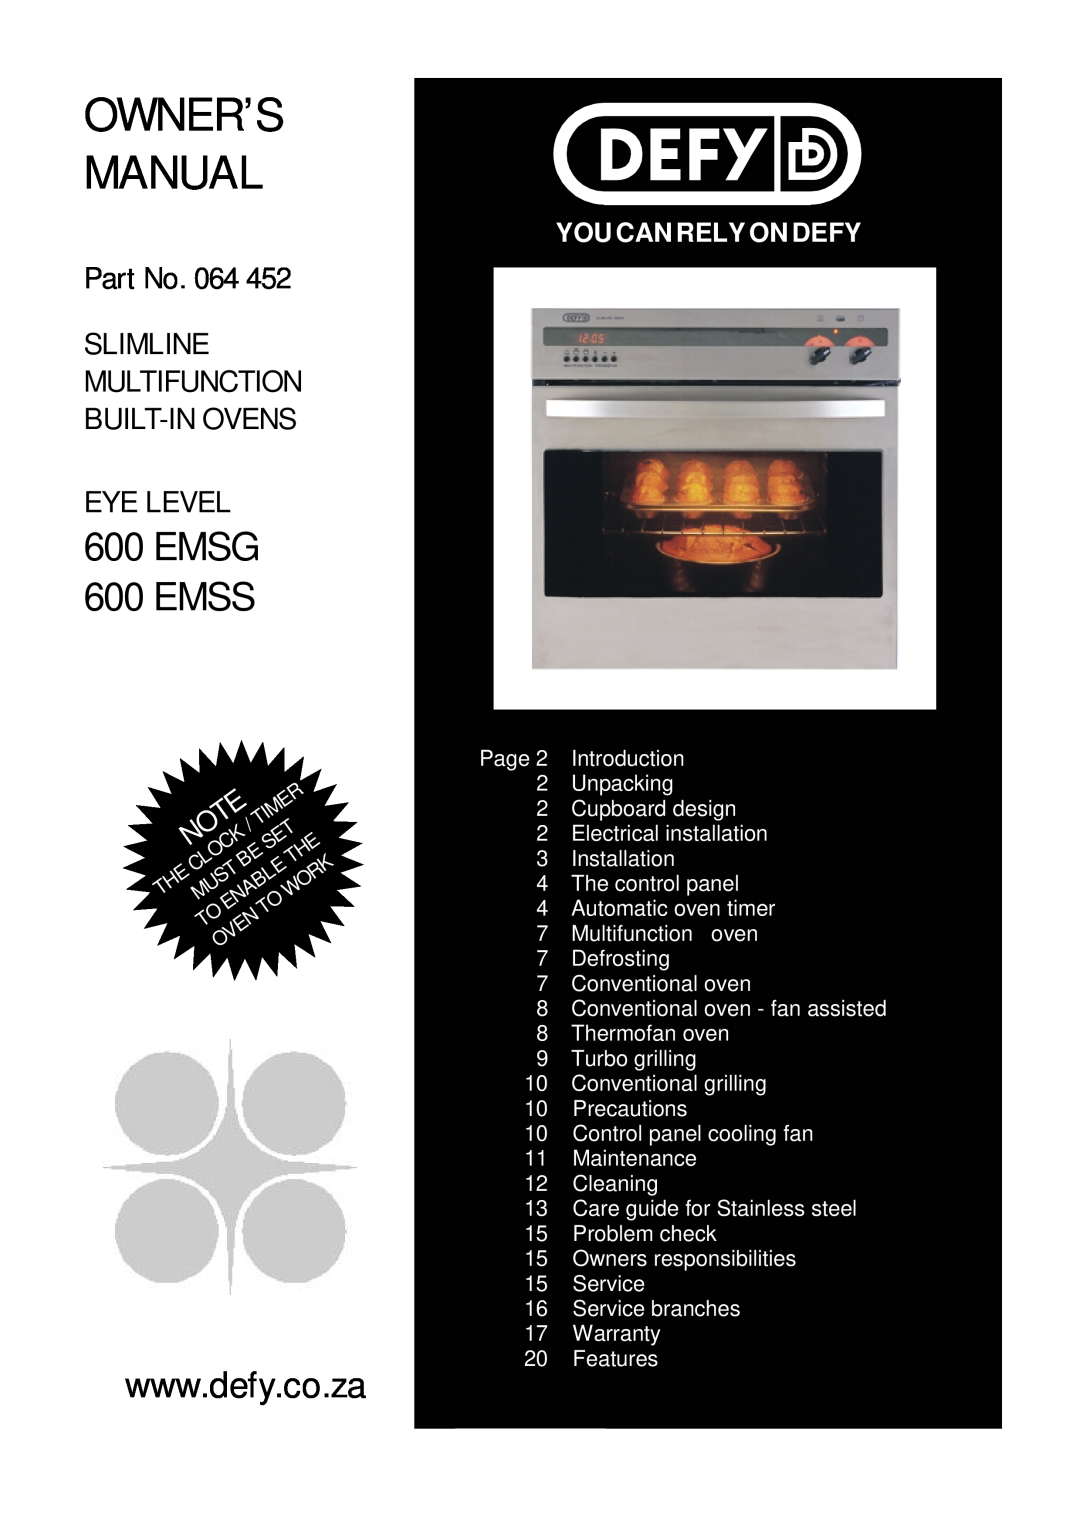 Defy Appliances 600 EMSG owner manual 600EMSG 600EMSS, Part No. 064 SLIMLINE MULTIFUNCTION BUILT-INOVENS, Eye Level 